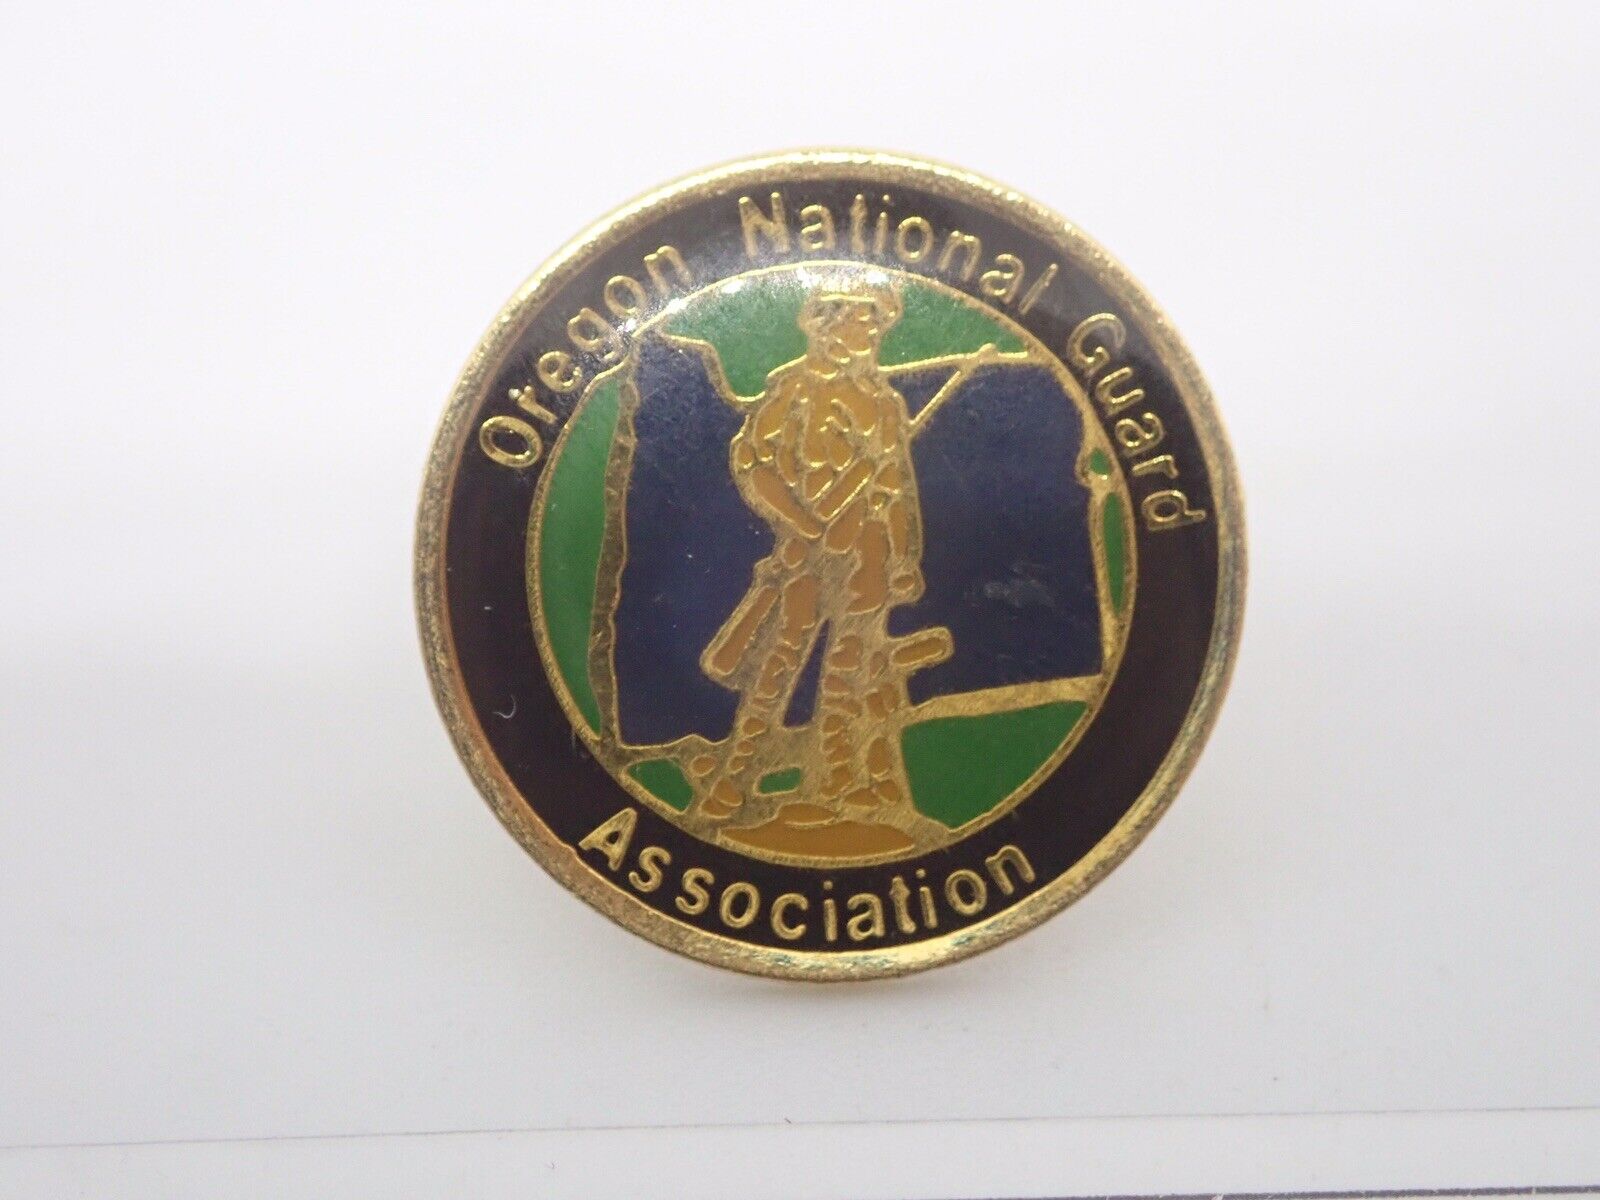 Oregon National Gaurd Association Vintage Lapel Pin